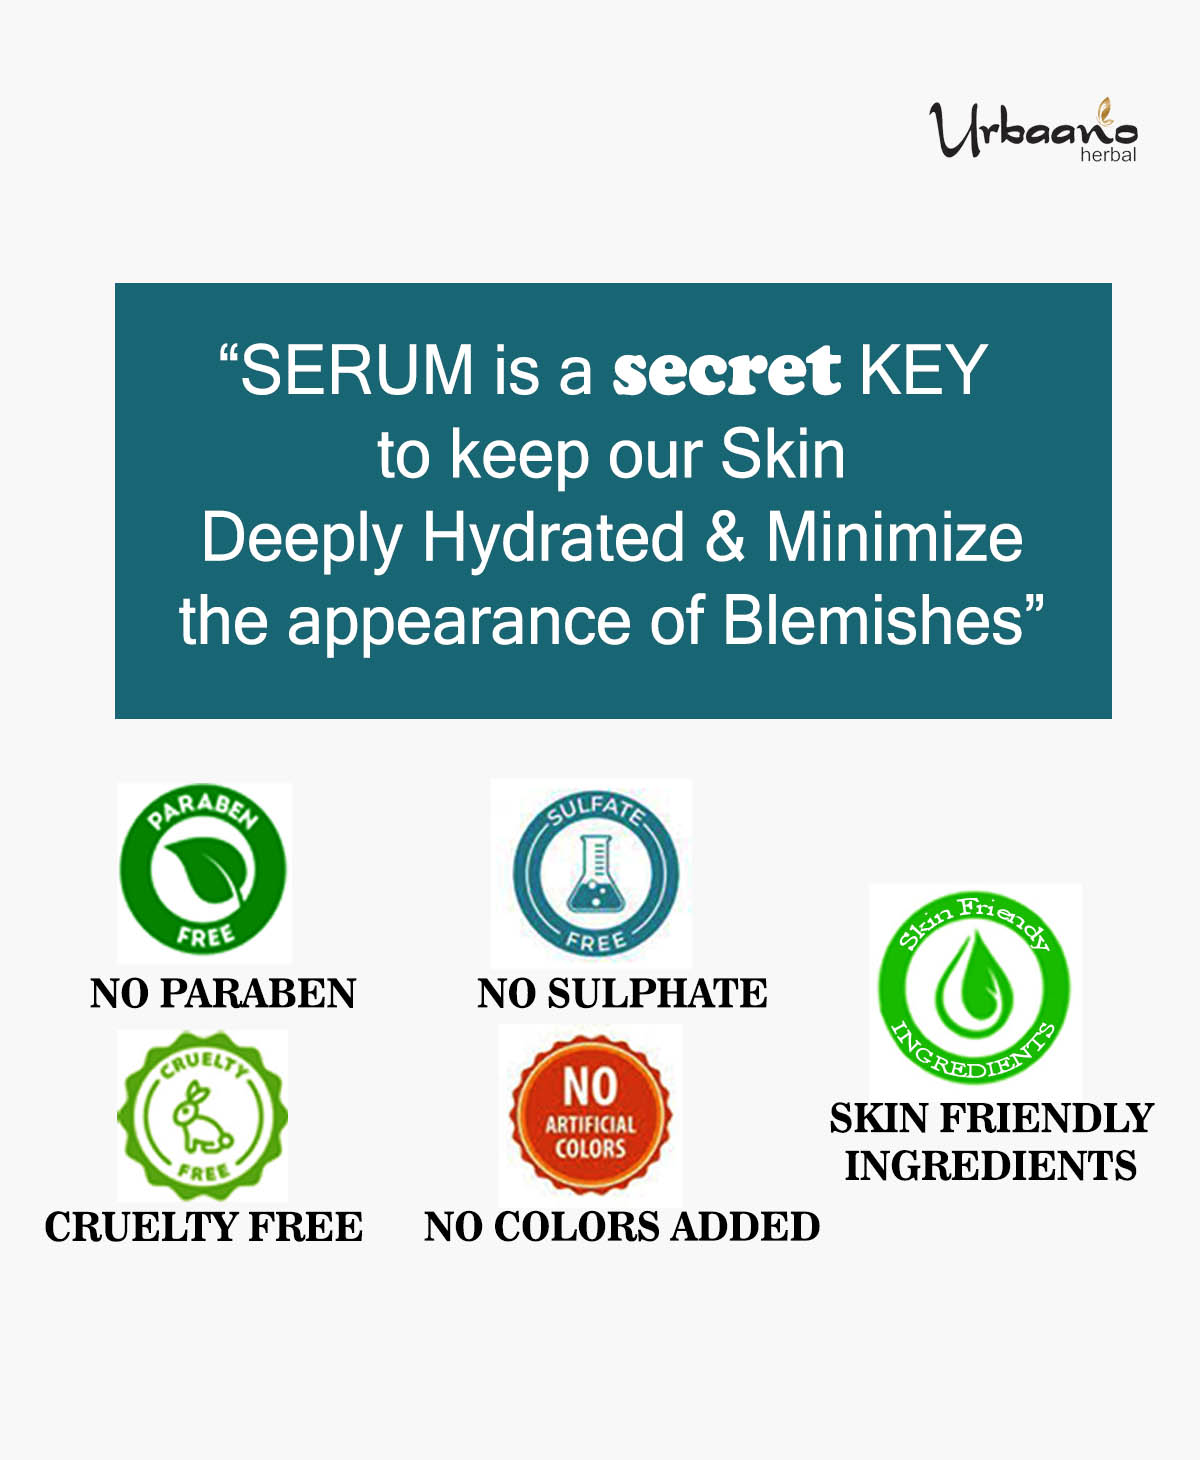 urbaano herbal vitamin c face serum for skin hydration blemish free skin